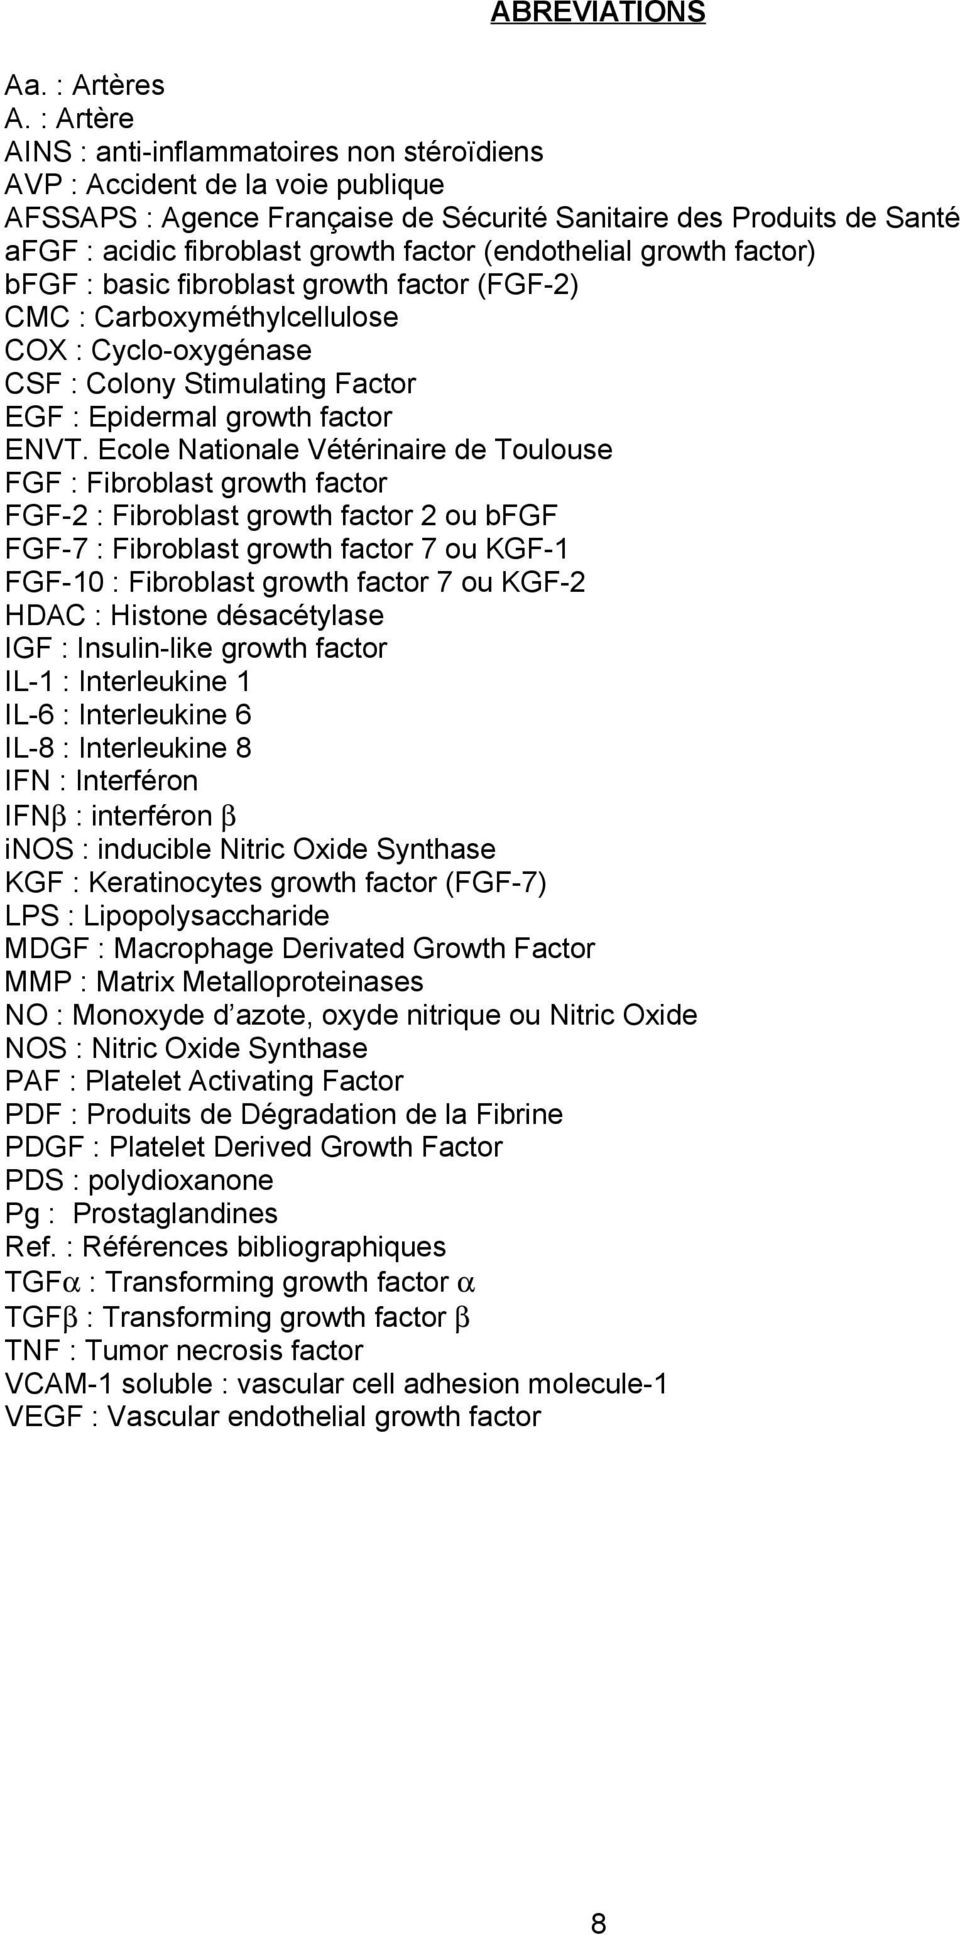 (endothelial growth factor) bfgf : basic fibroblast growth factor (FGF-2) CMC : Carboxyméthylcellulose COX : Cyclo-oxygénase CSF : Colony Stimulating Factor EGF : Epidermal growth factor ENVT.